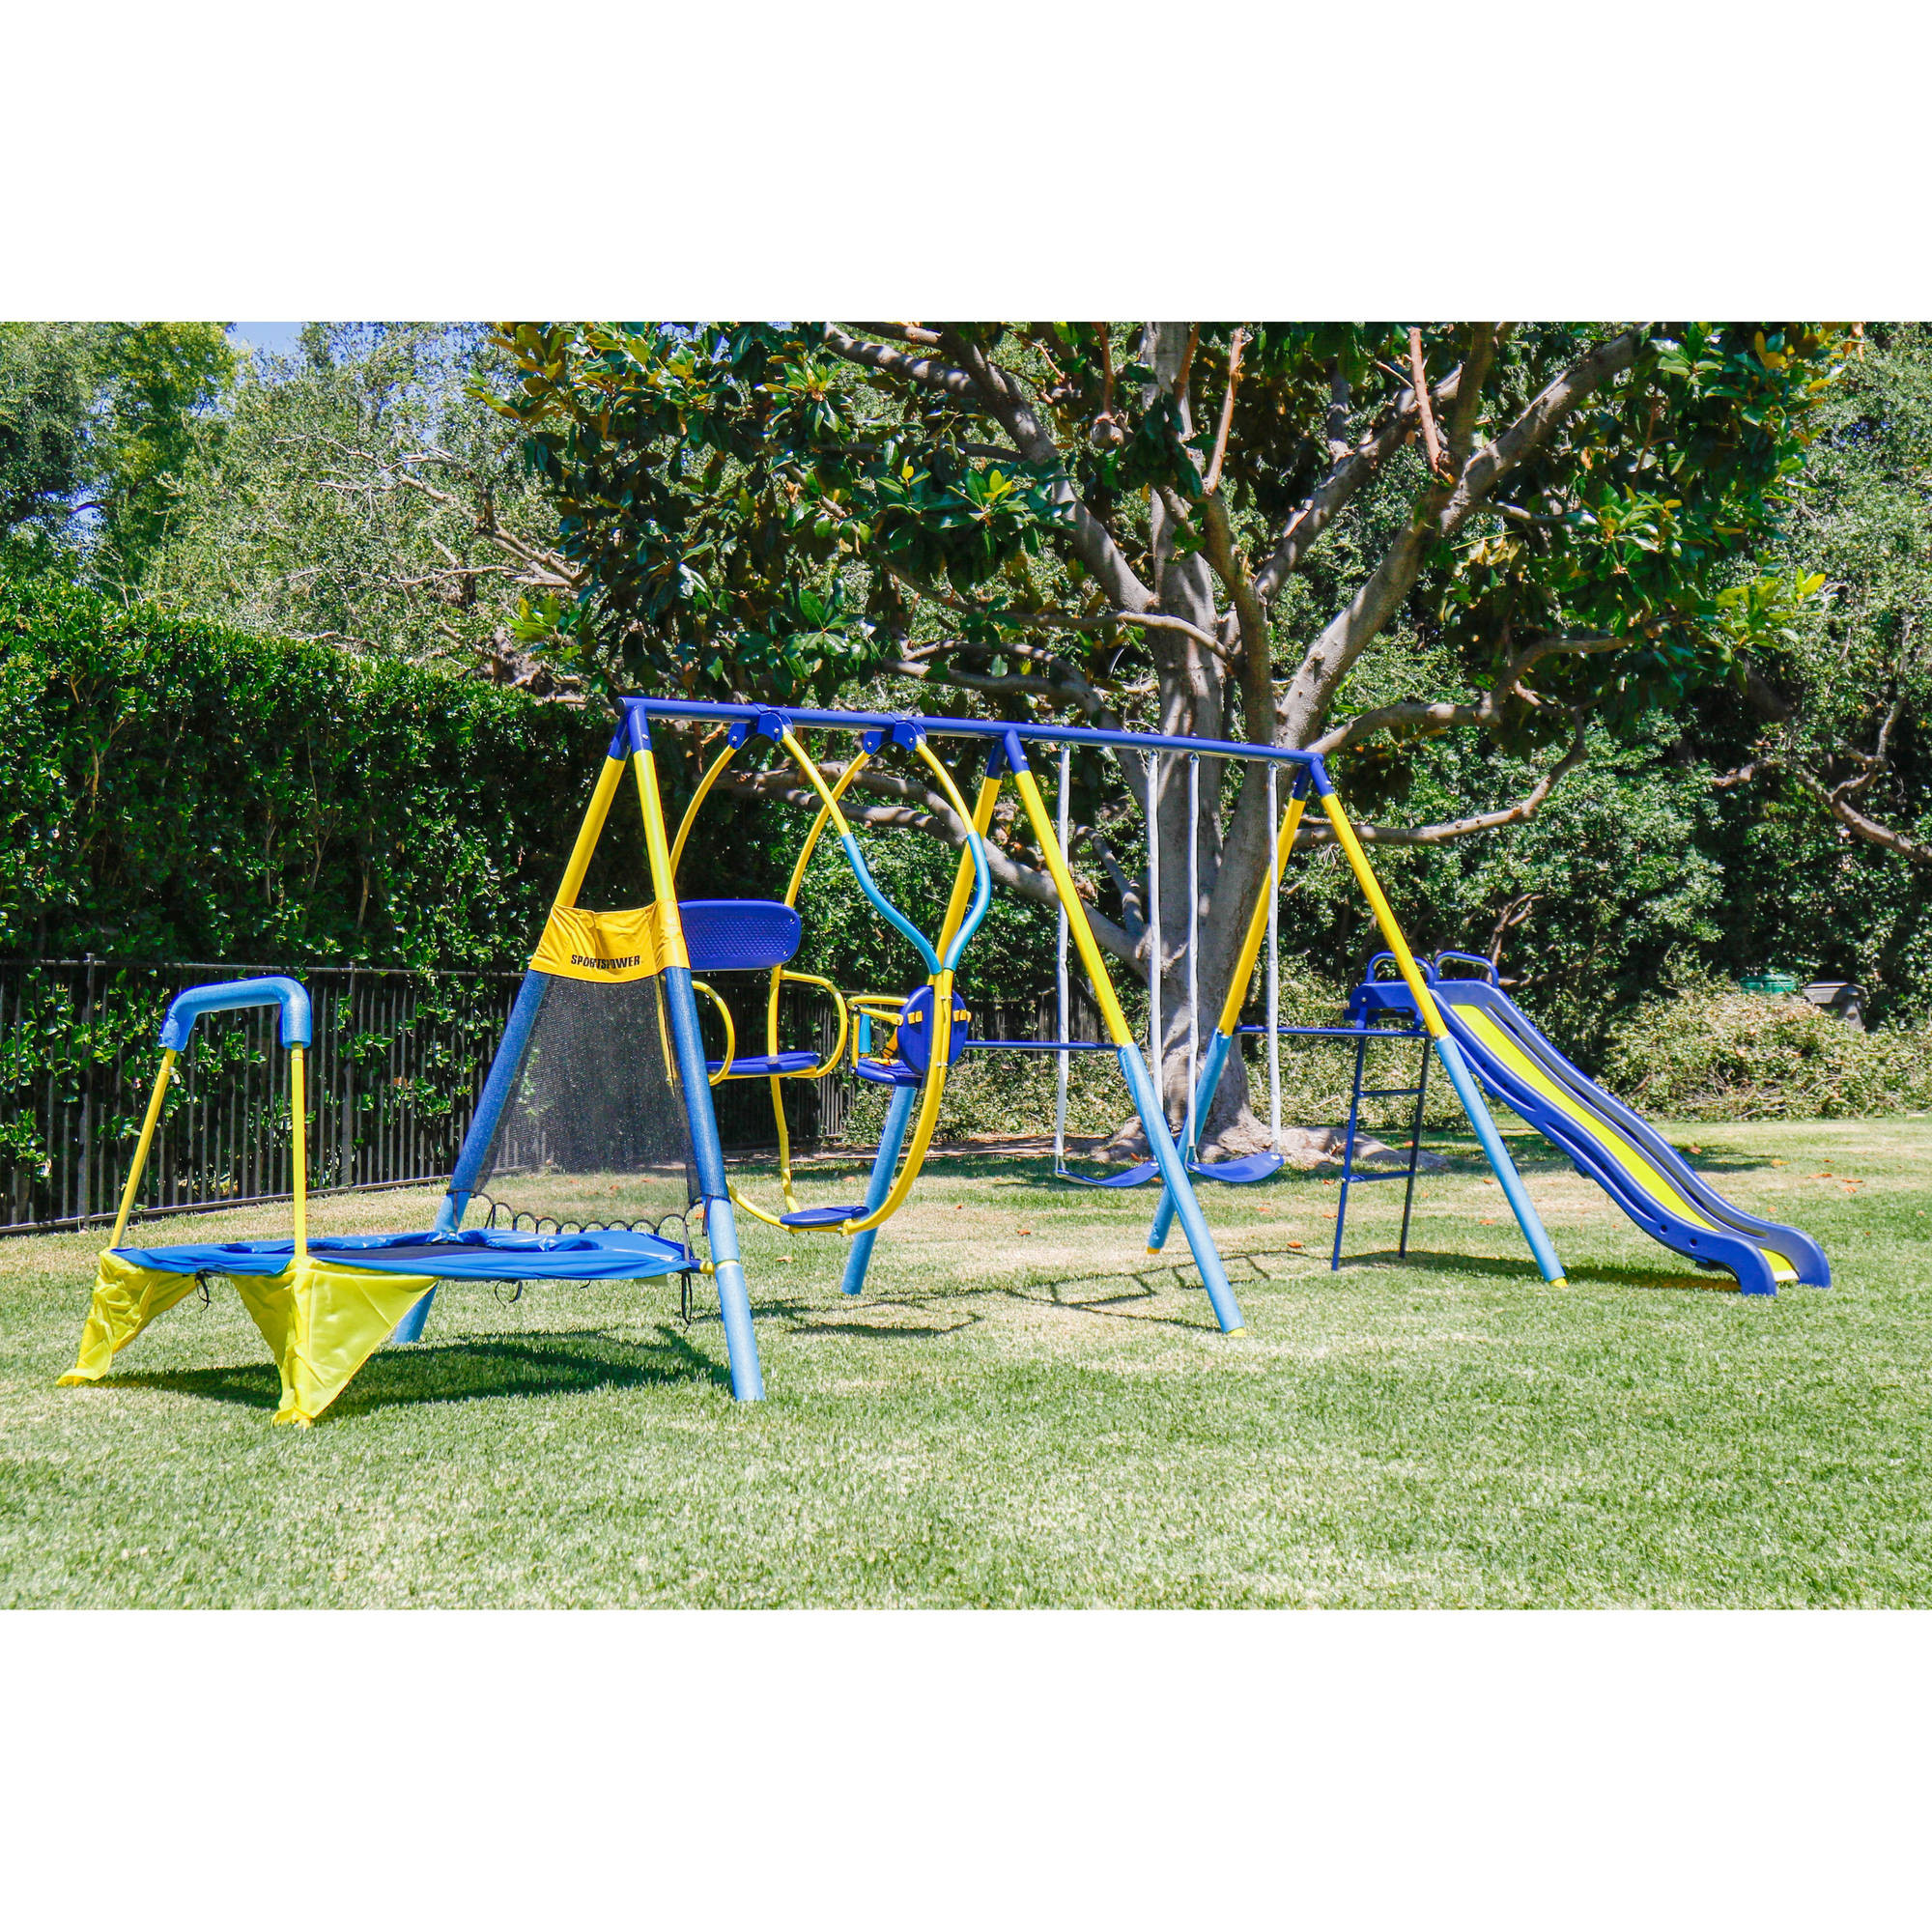 Backyard Swing Set For Kids
 Kids Playground Set Outdoor Swing Slide w Trampoline